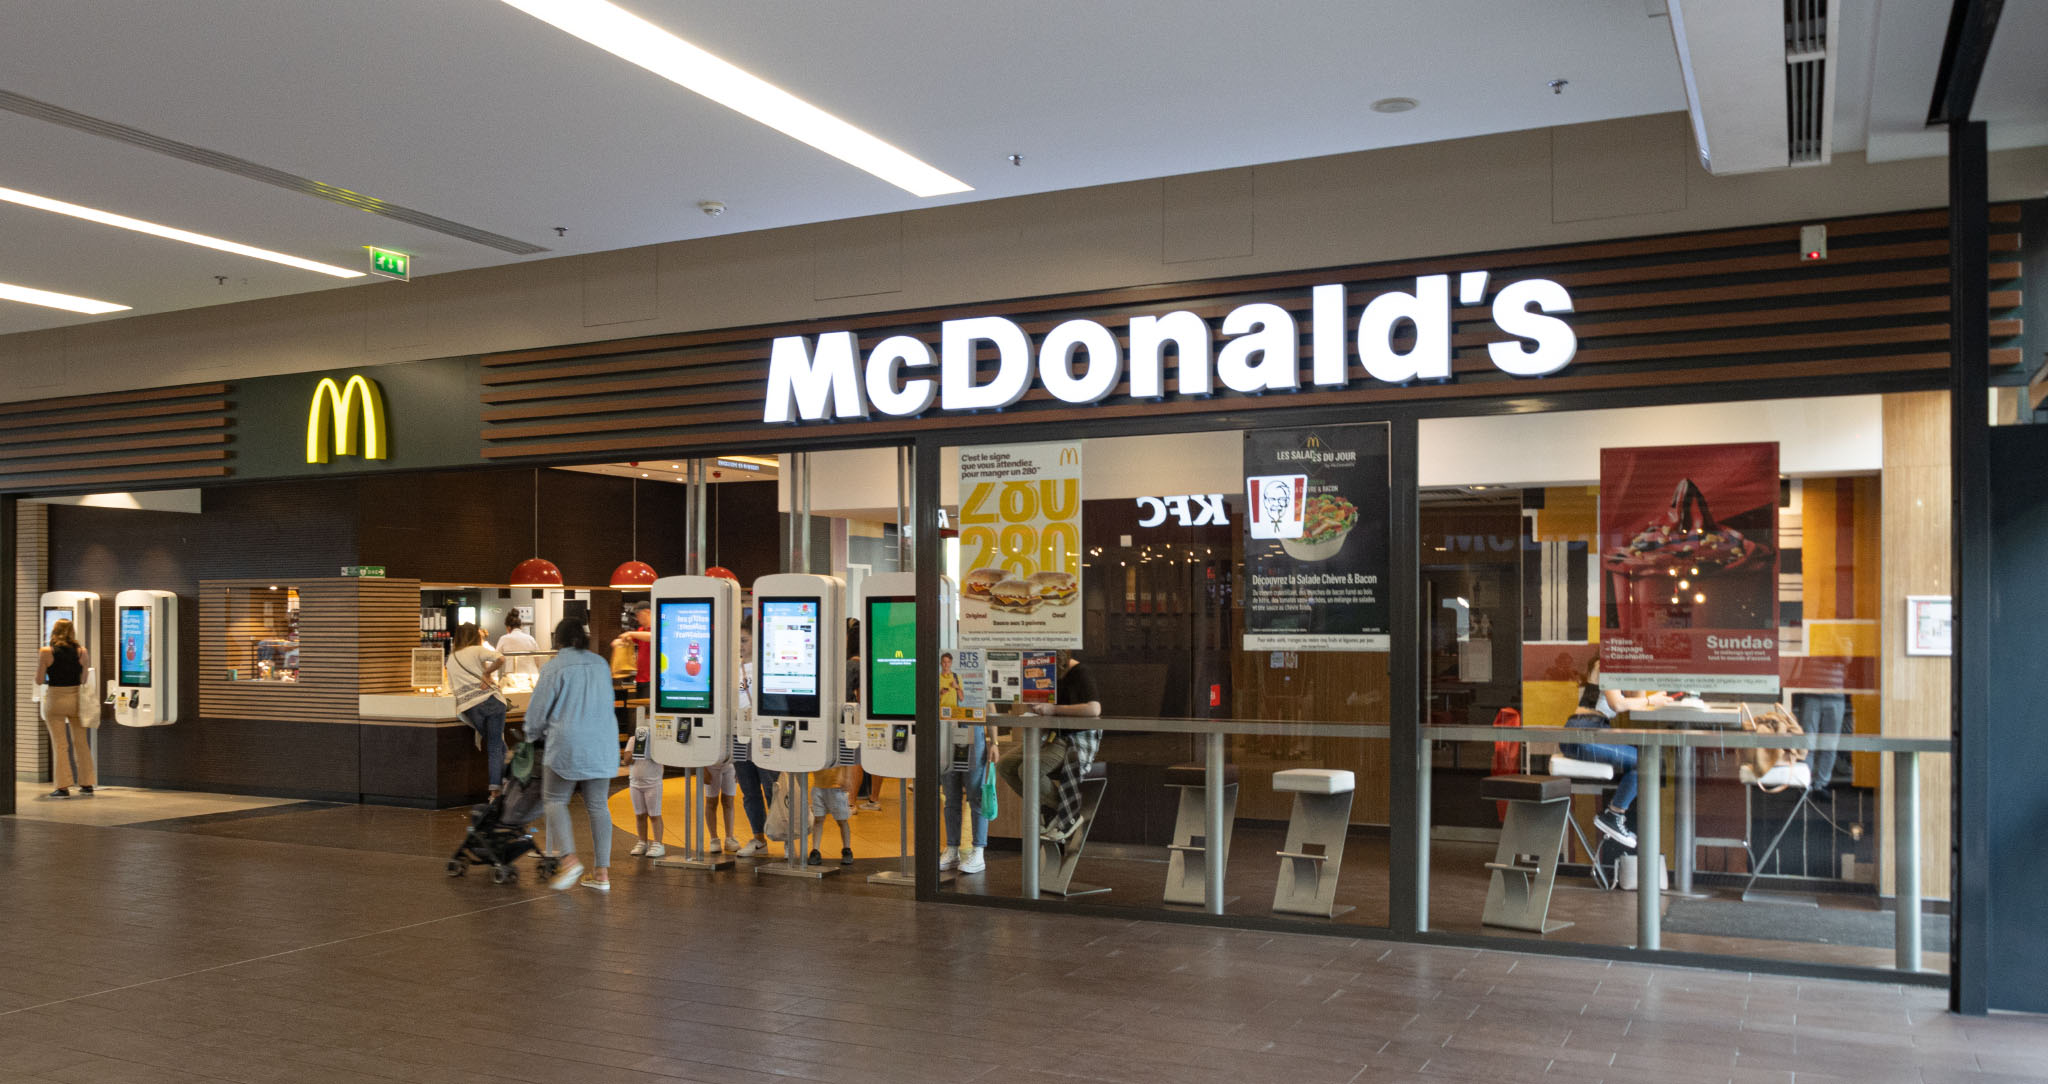 Das McDonald’s-Restaurant in Strasbourg (Rivetoile)